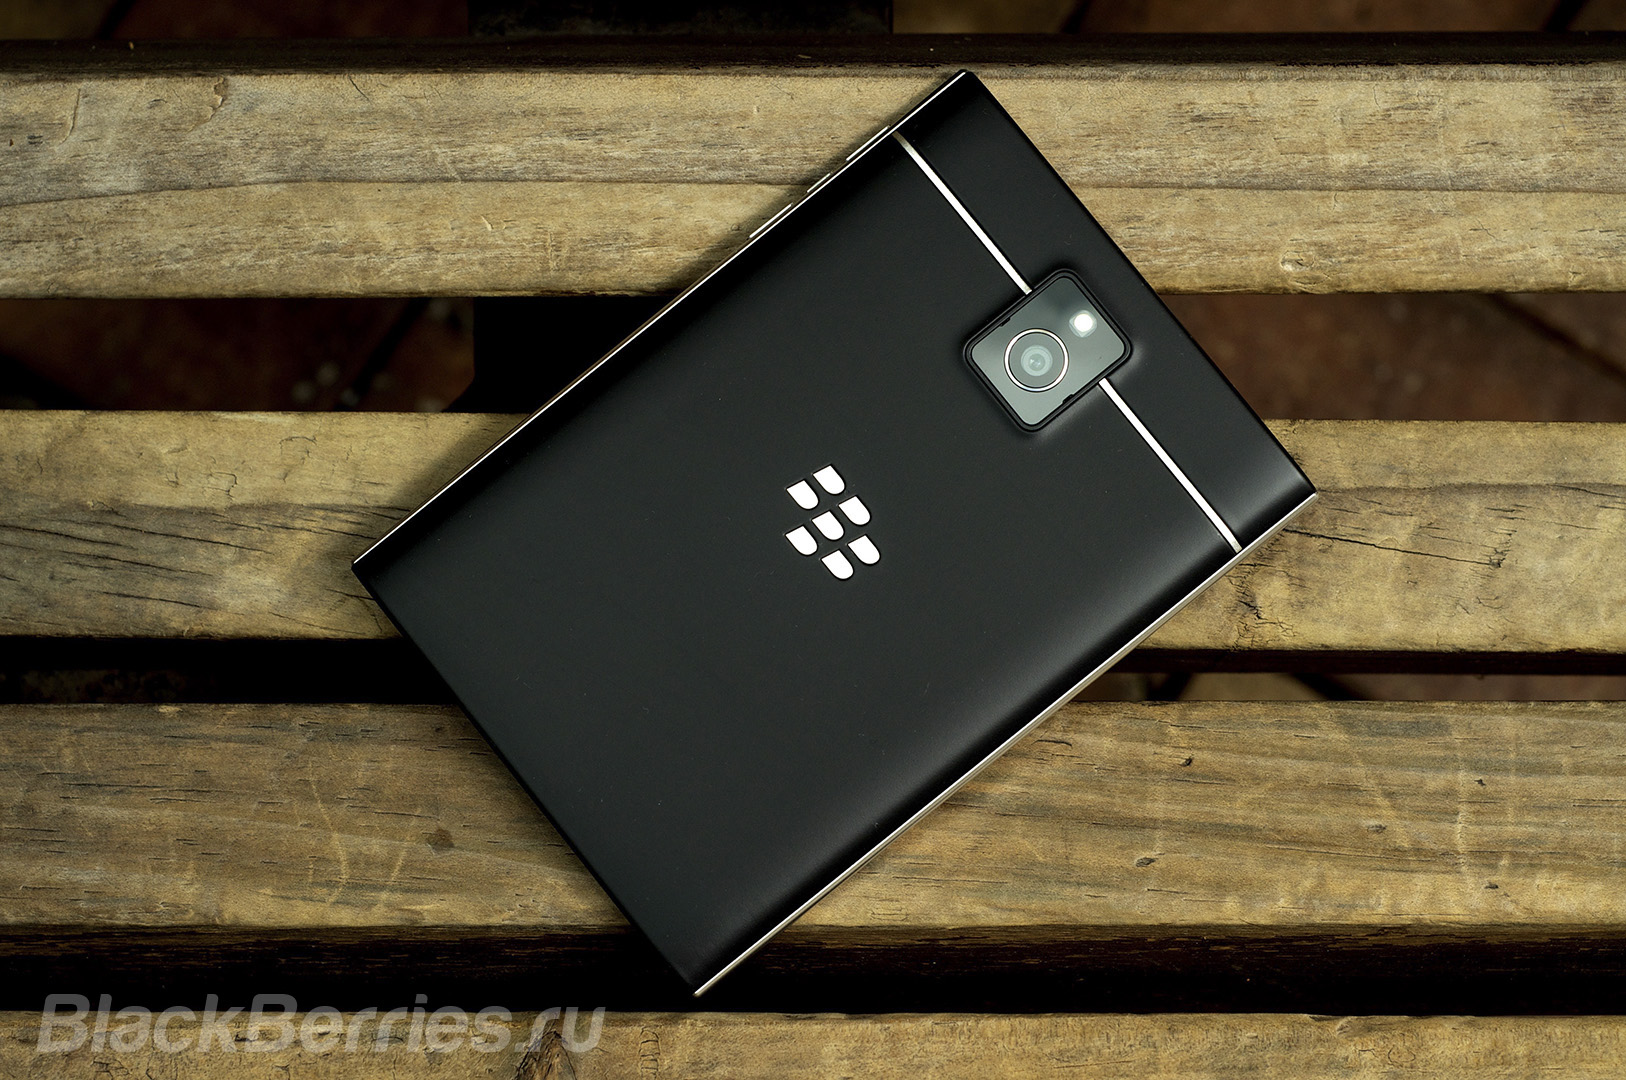 BlackBerry-Passport-Review-2014-30